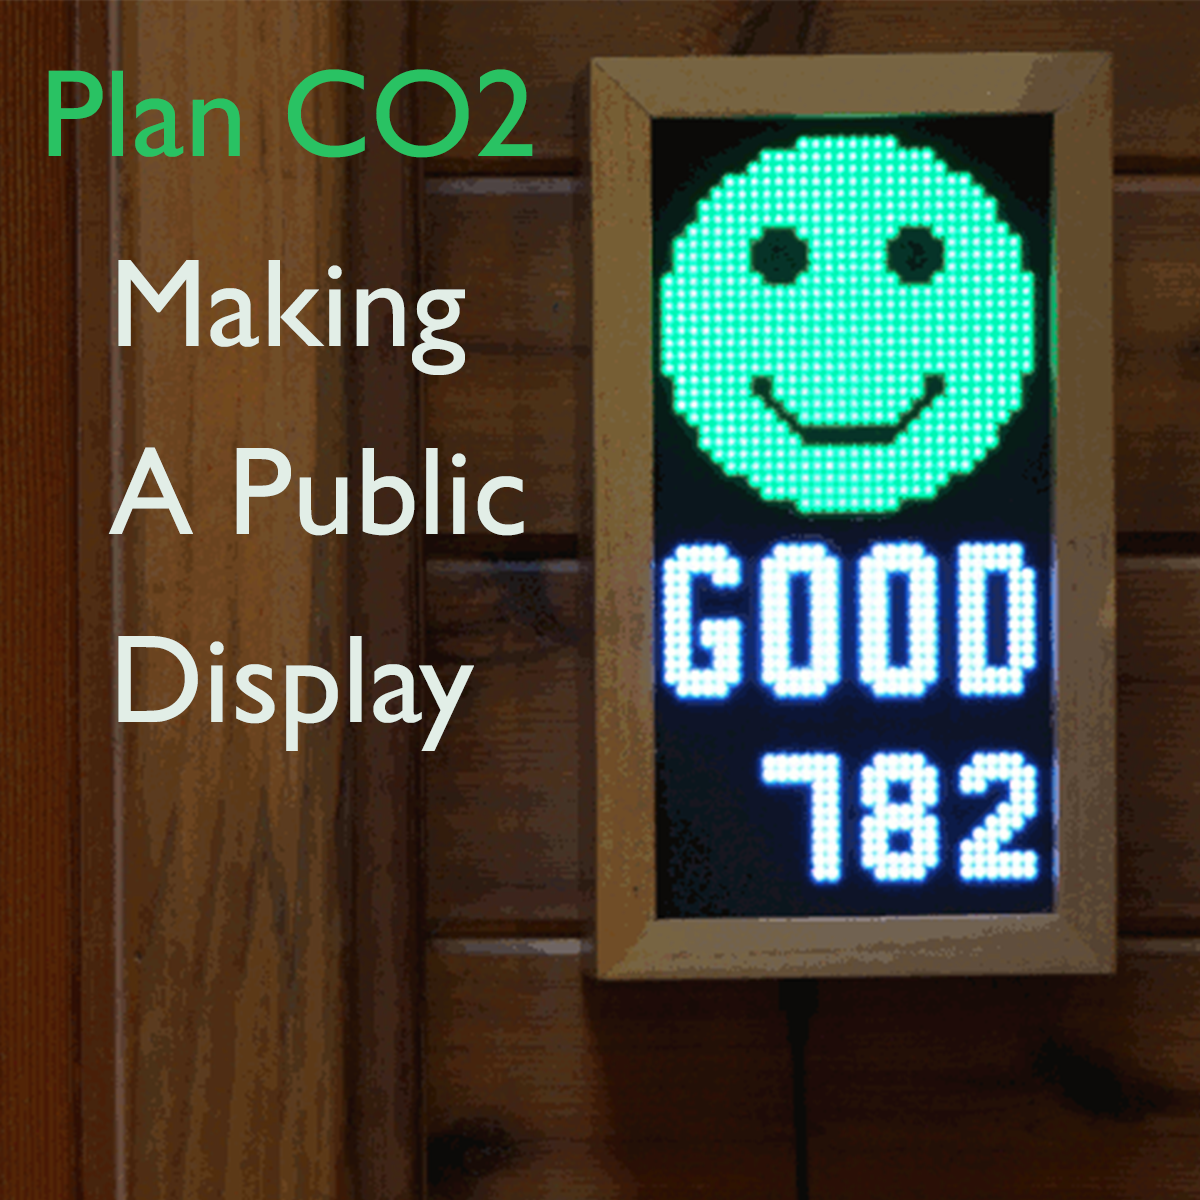 Plan CO2: Making A Public Display